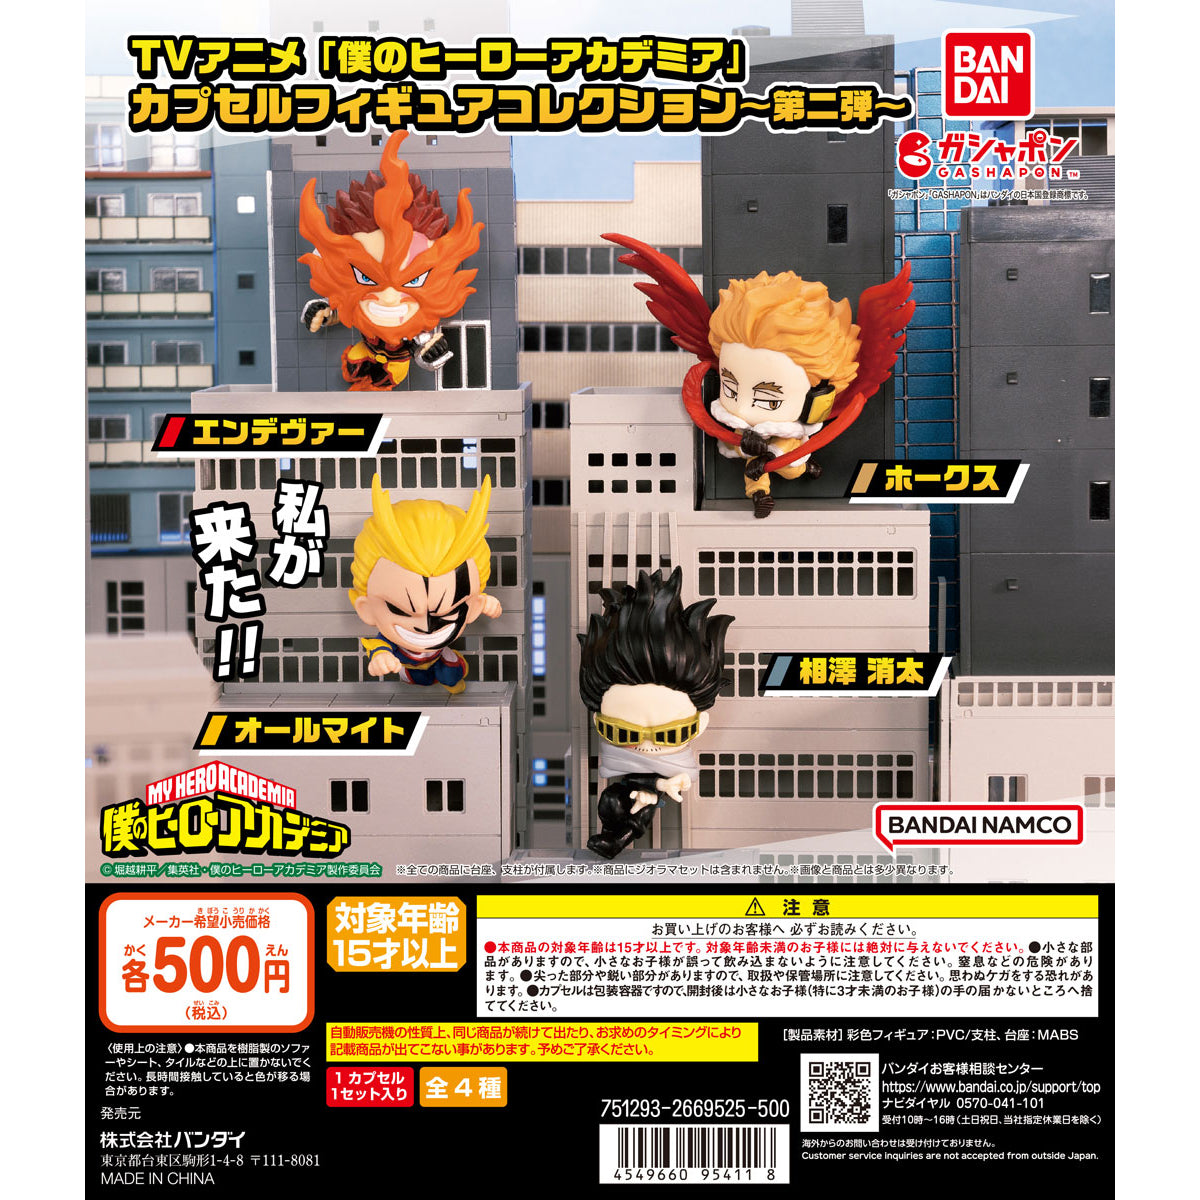 TV Anime “My Hero Academia” Capsule Figure Collection ~Second Edition~